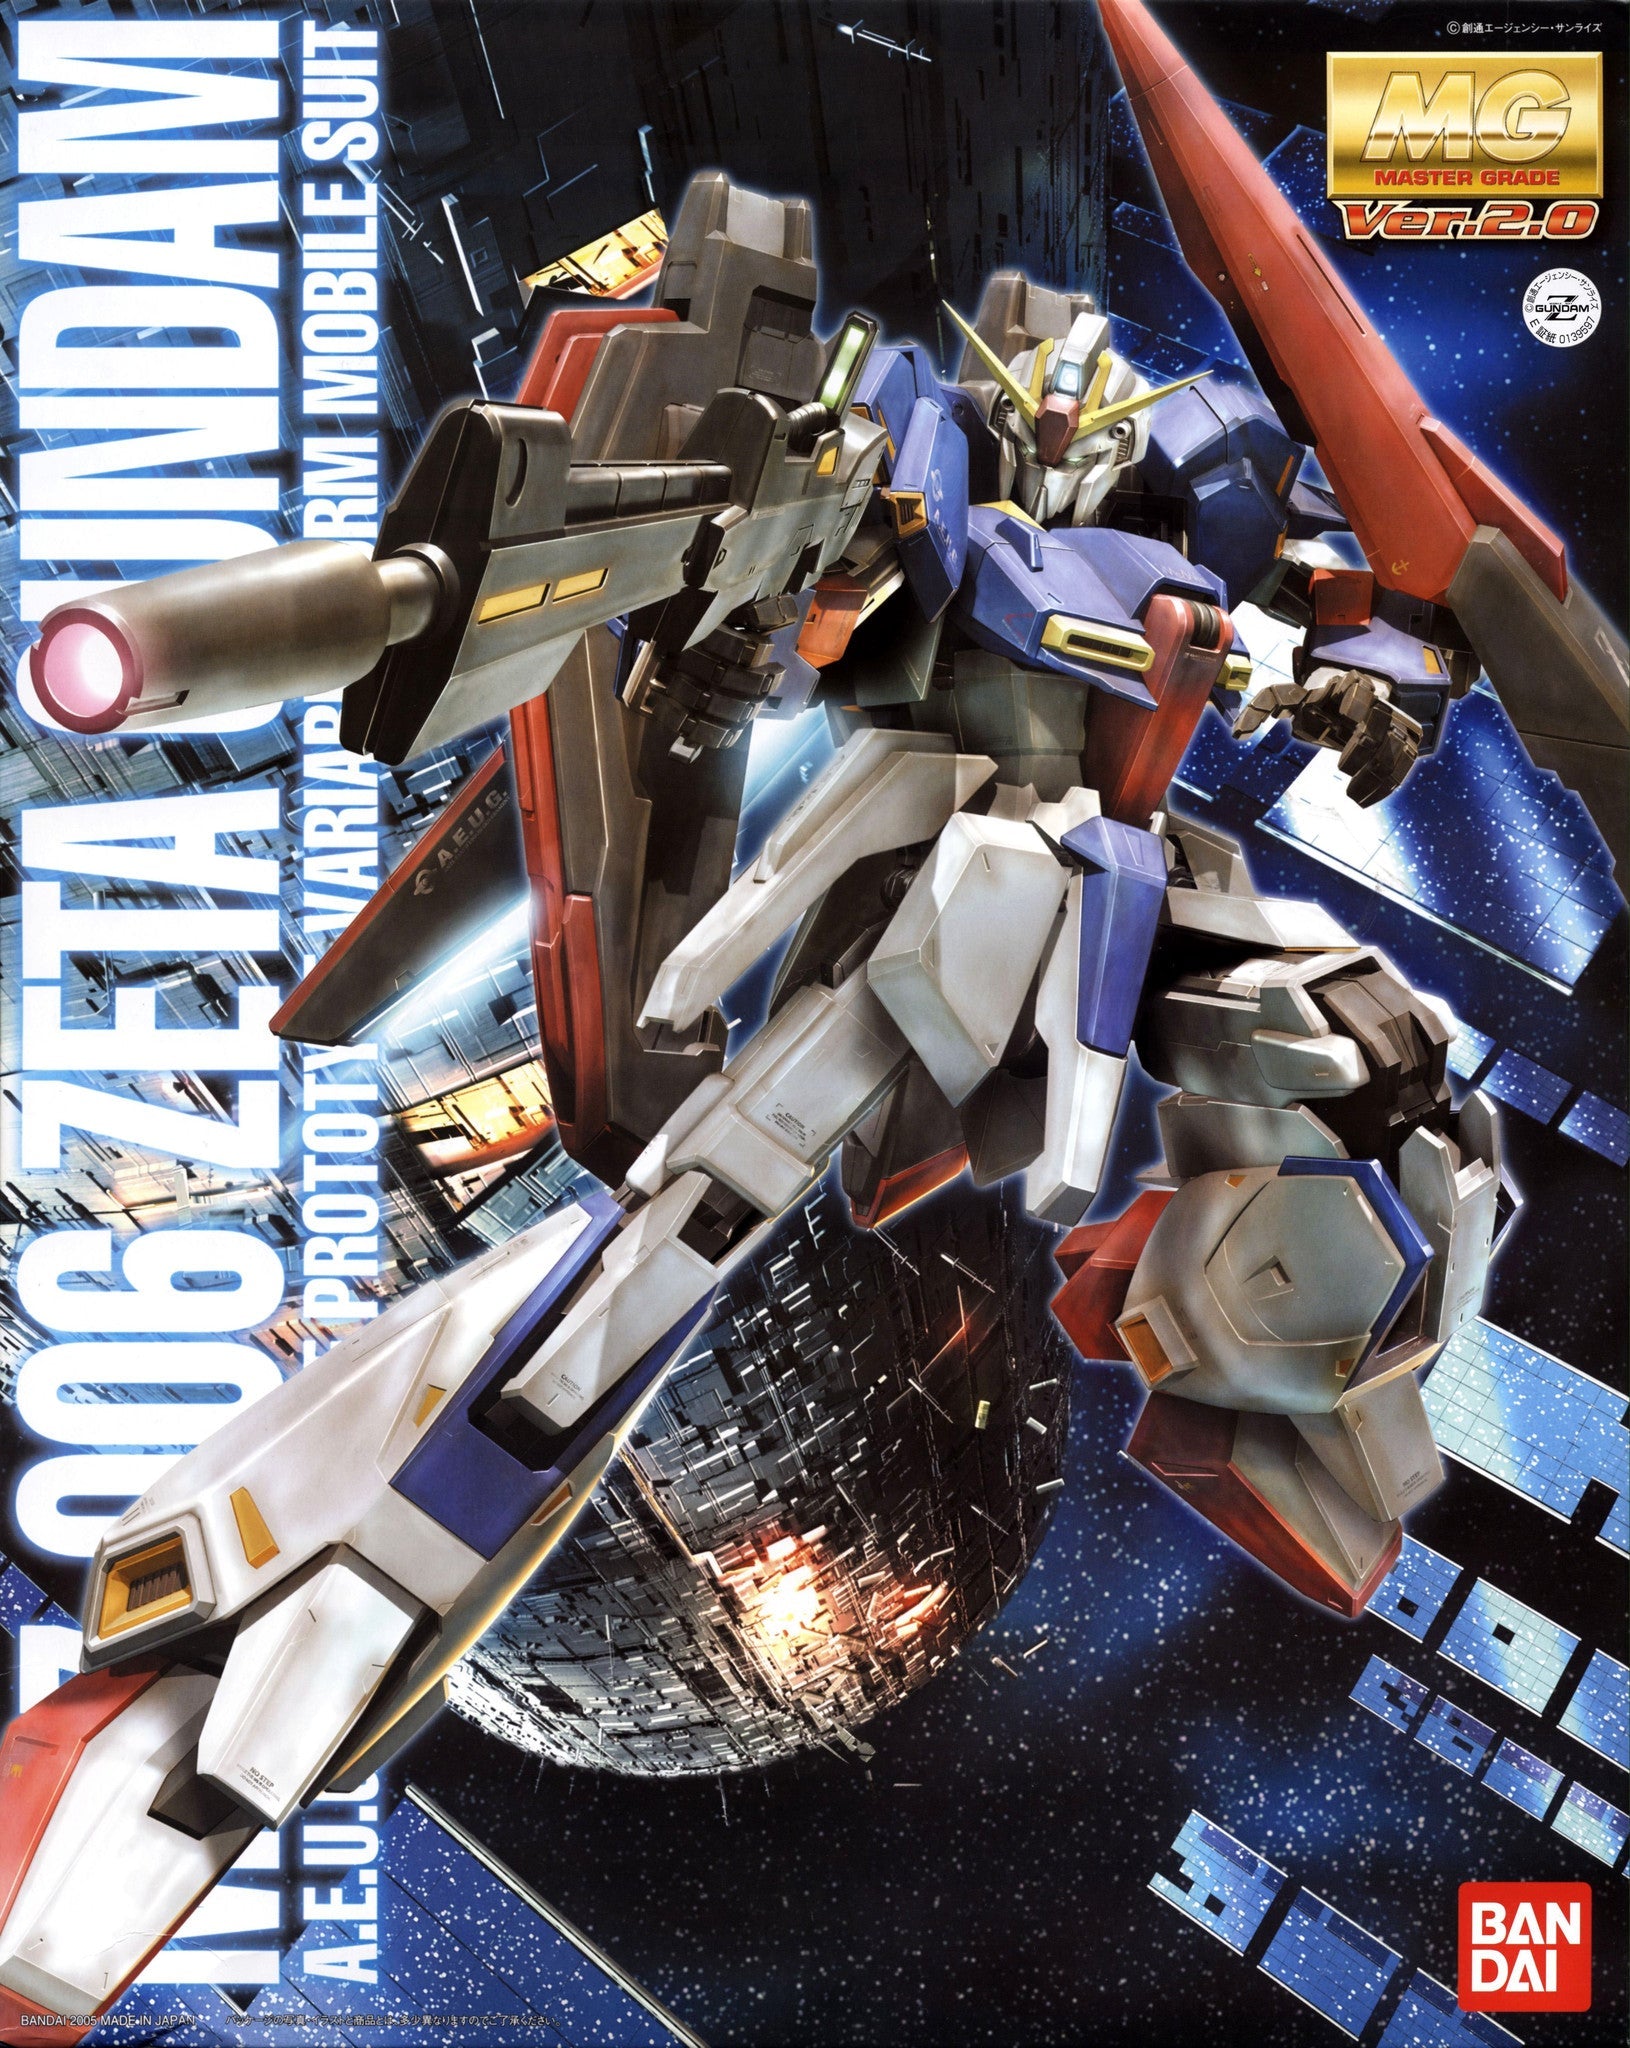 MG MSZ-006 Zeta Gundam Ver. 2.0